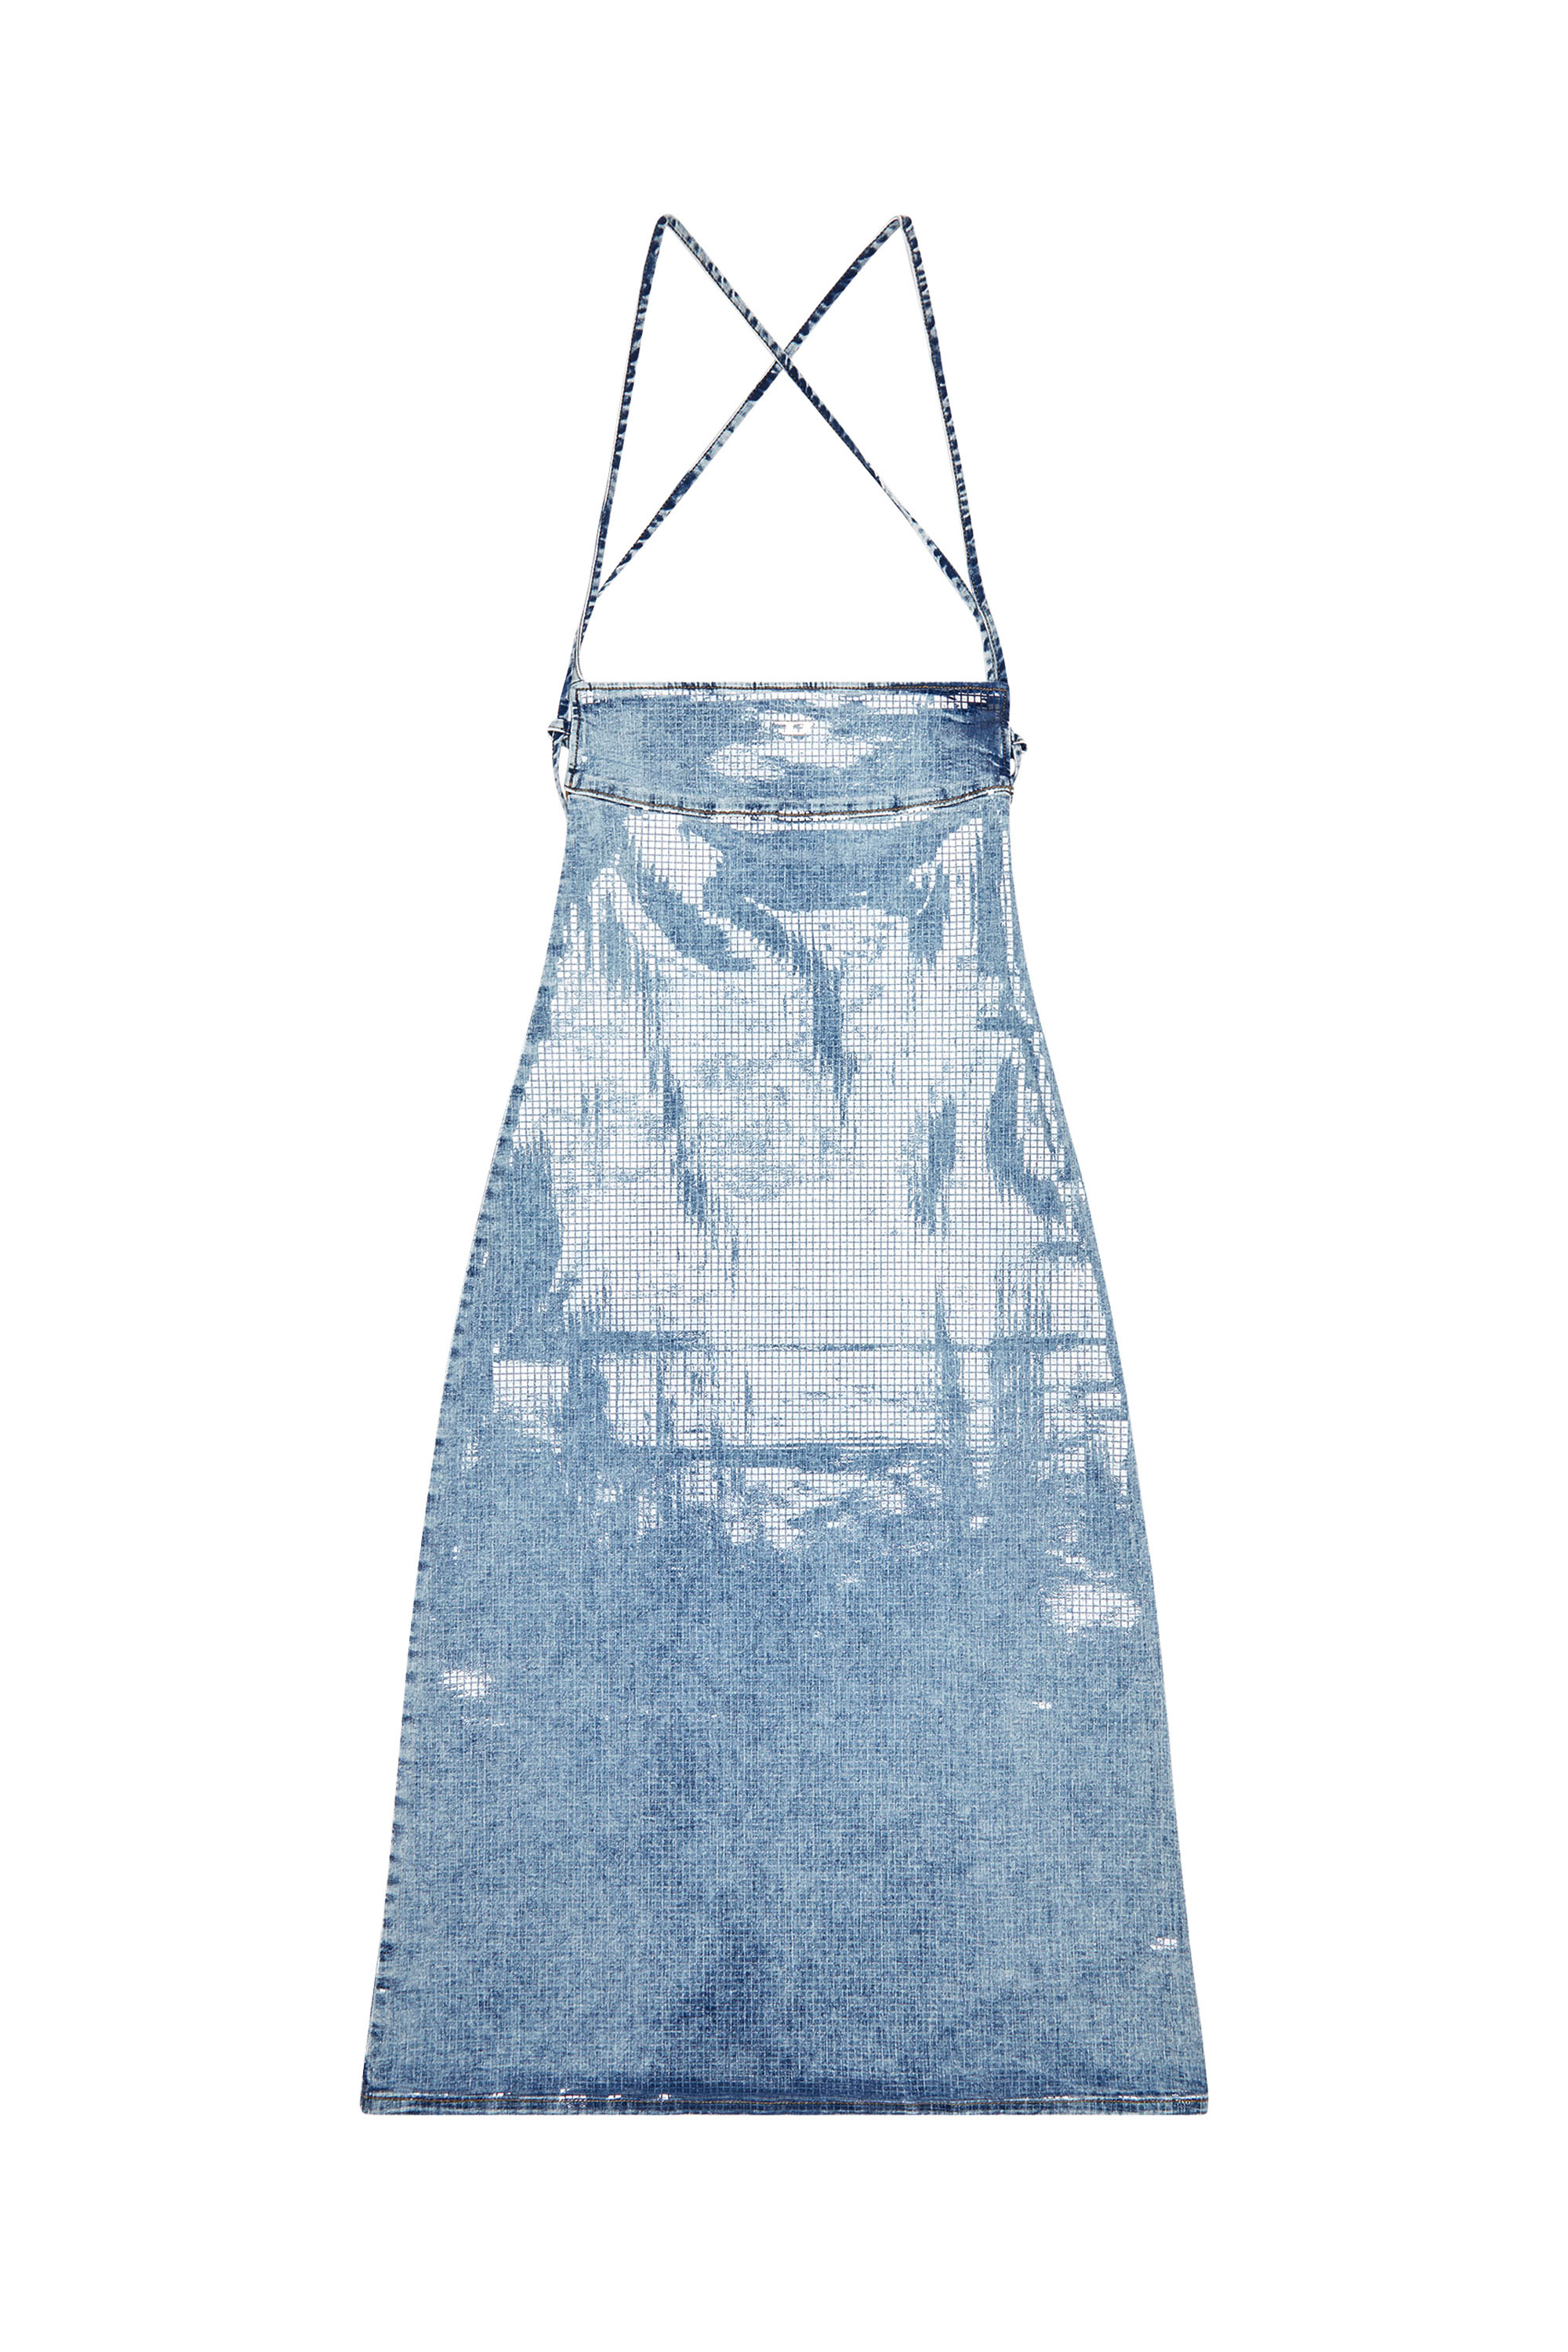 Diesel - DE-HELD-S, Woman Strappy midi dress in sequin denim in Blue - Image 2